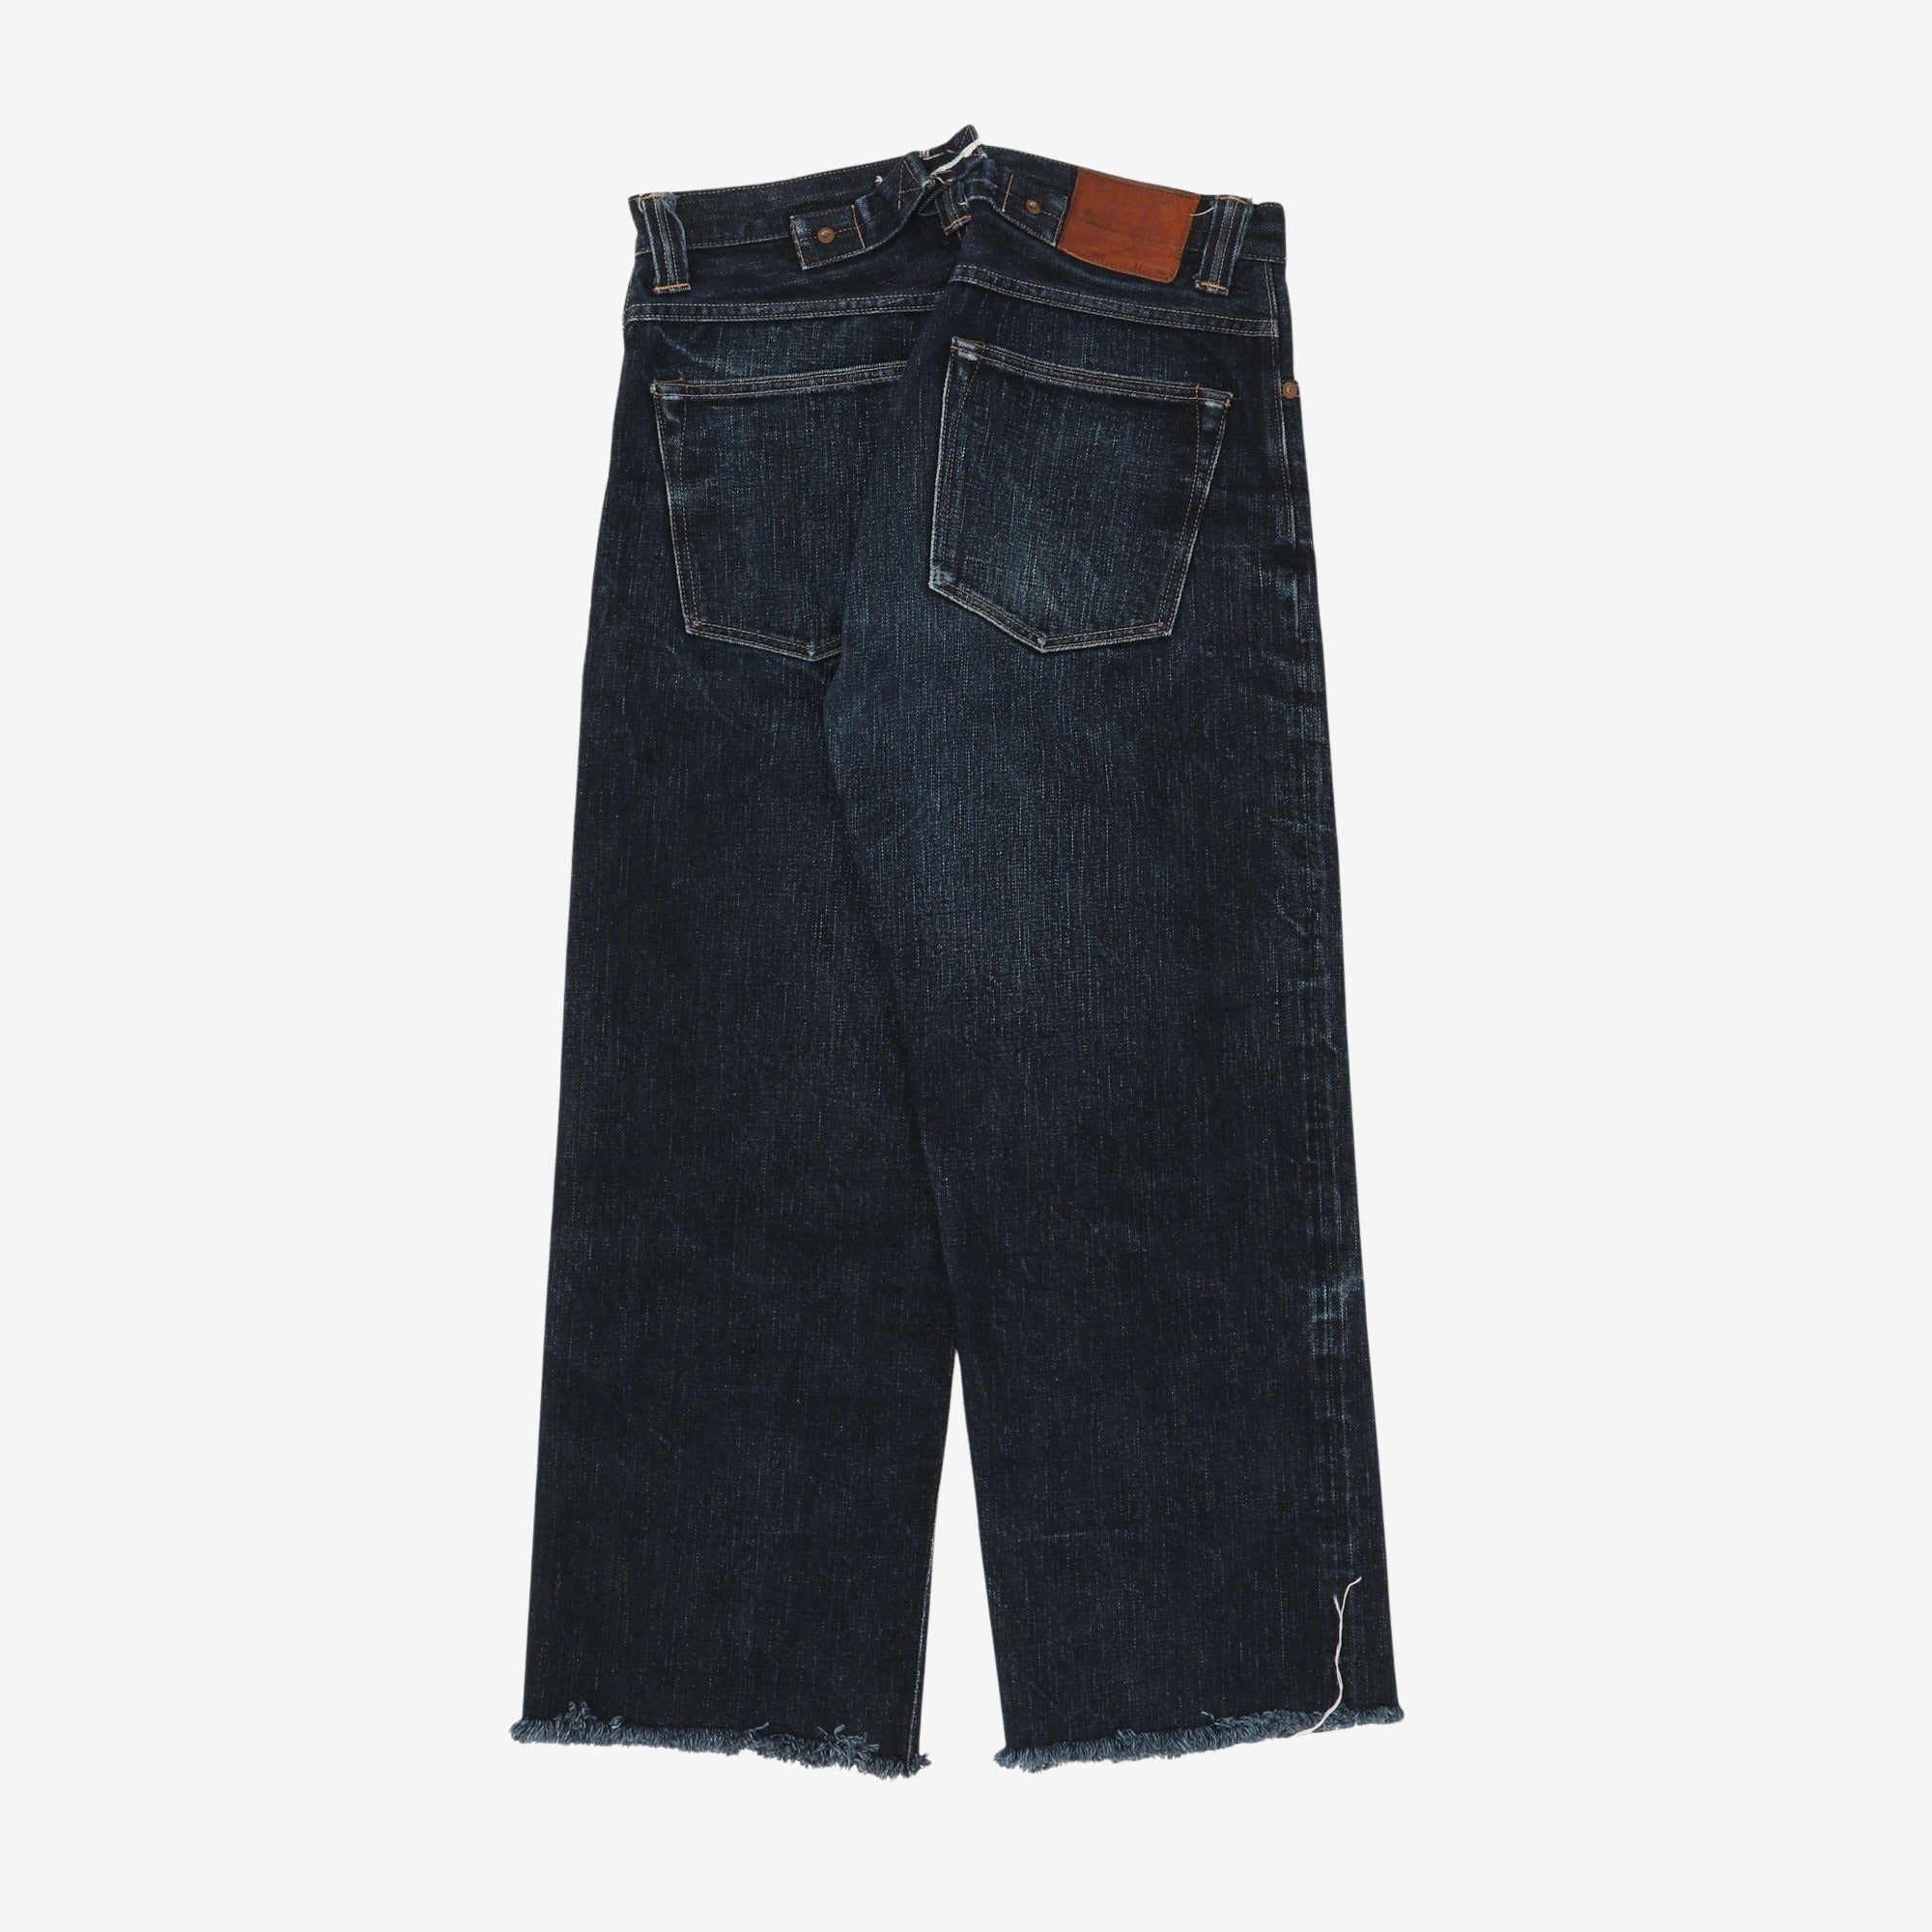 Lot 900S Jeans (Fits 32x26.5)